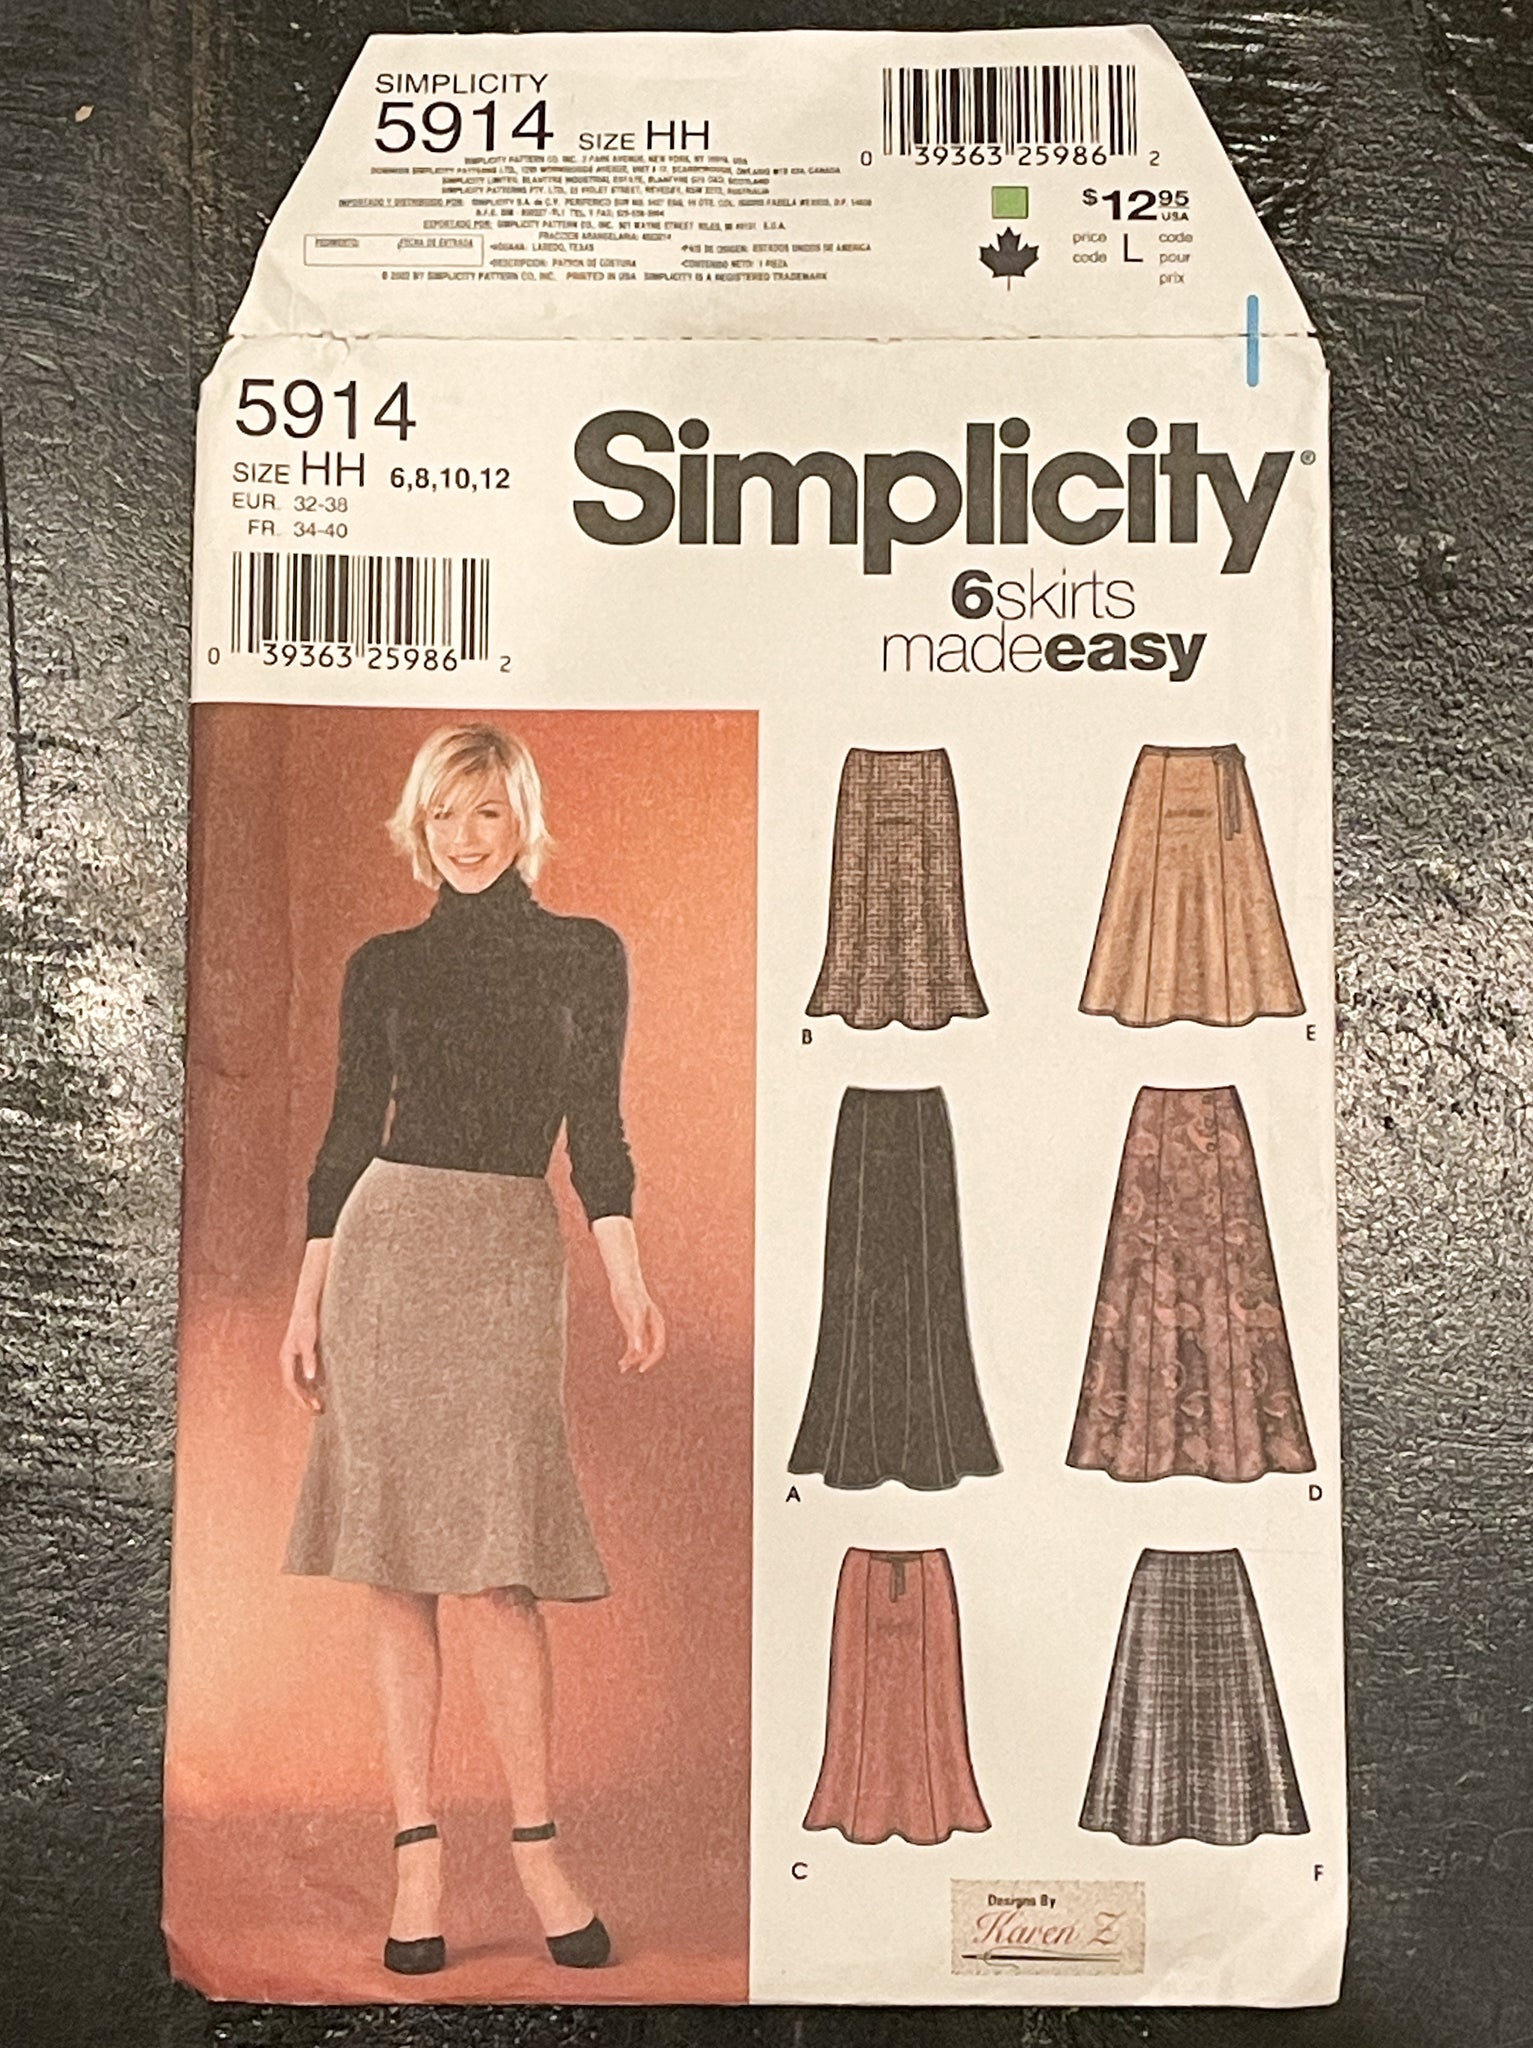 SALE 2002 Simplicity 5914 Pattern - Women's Skirts